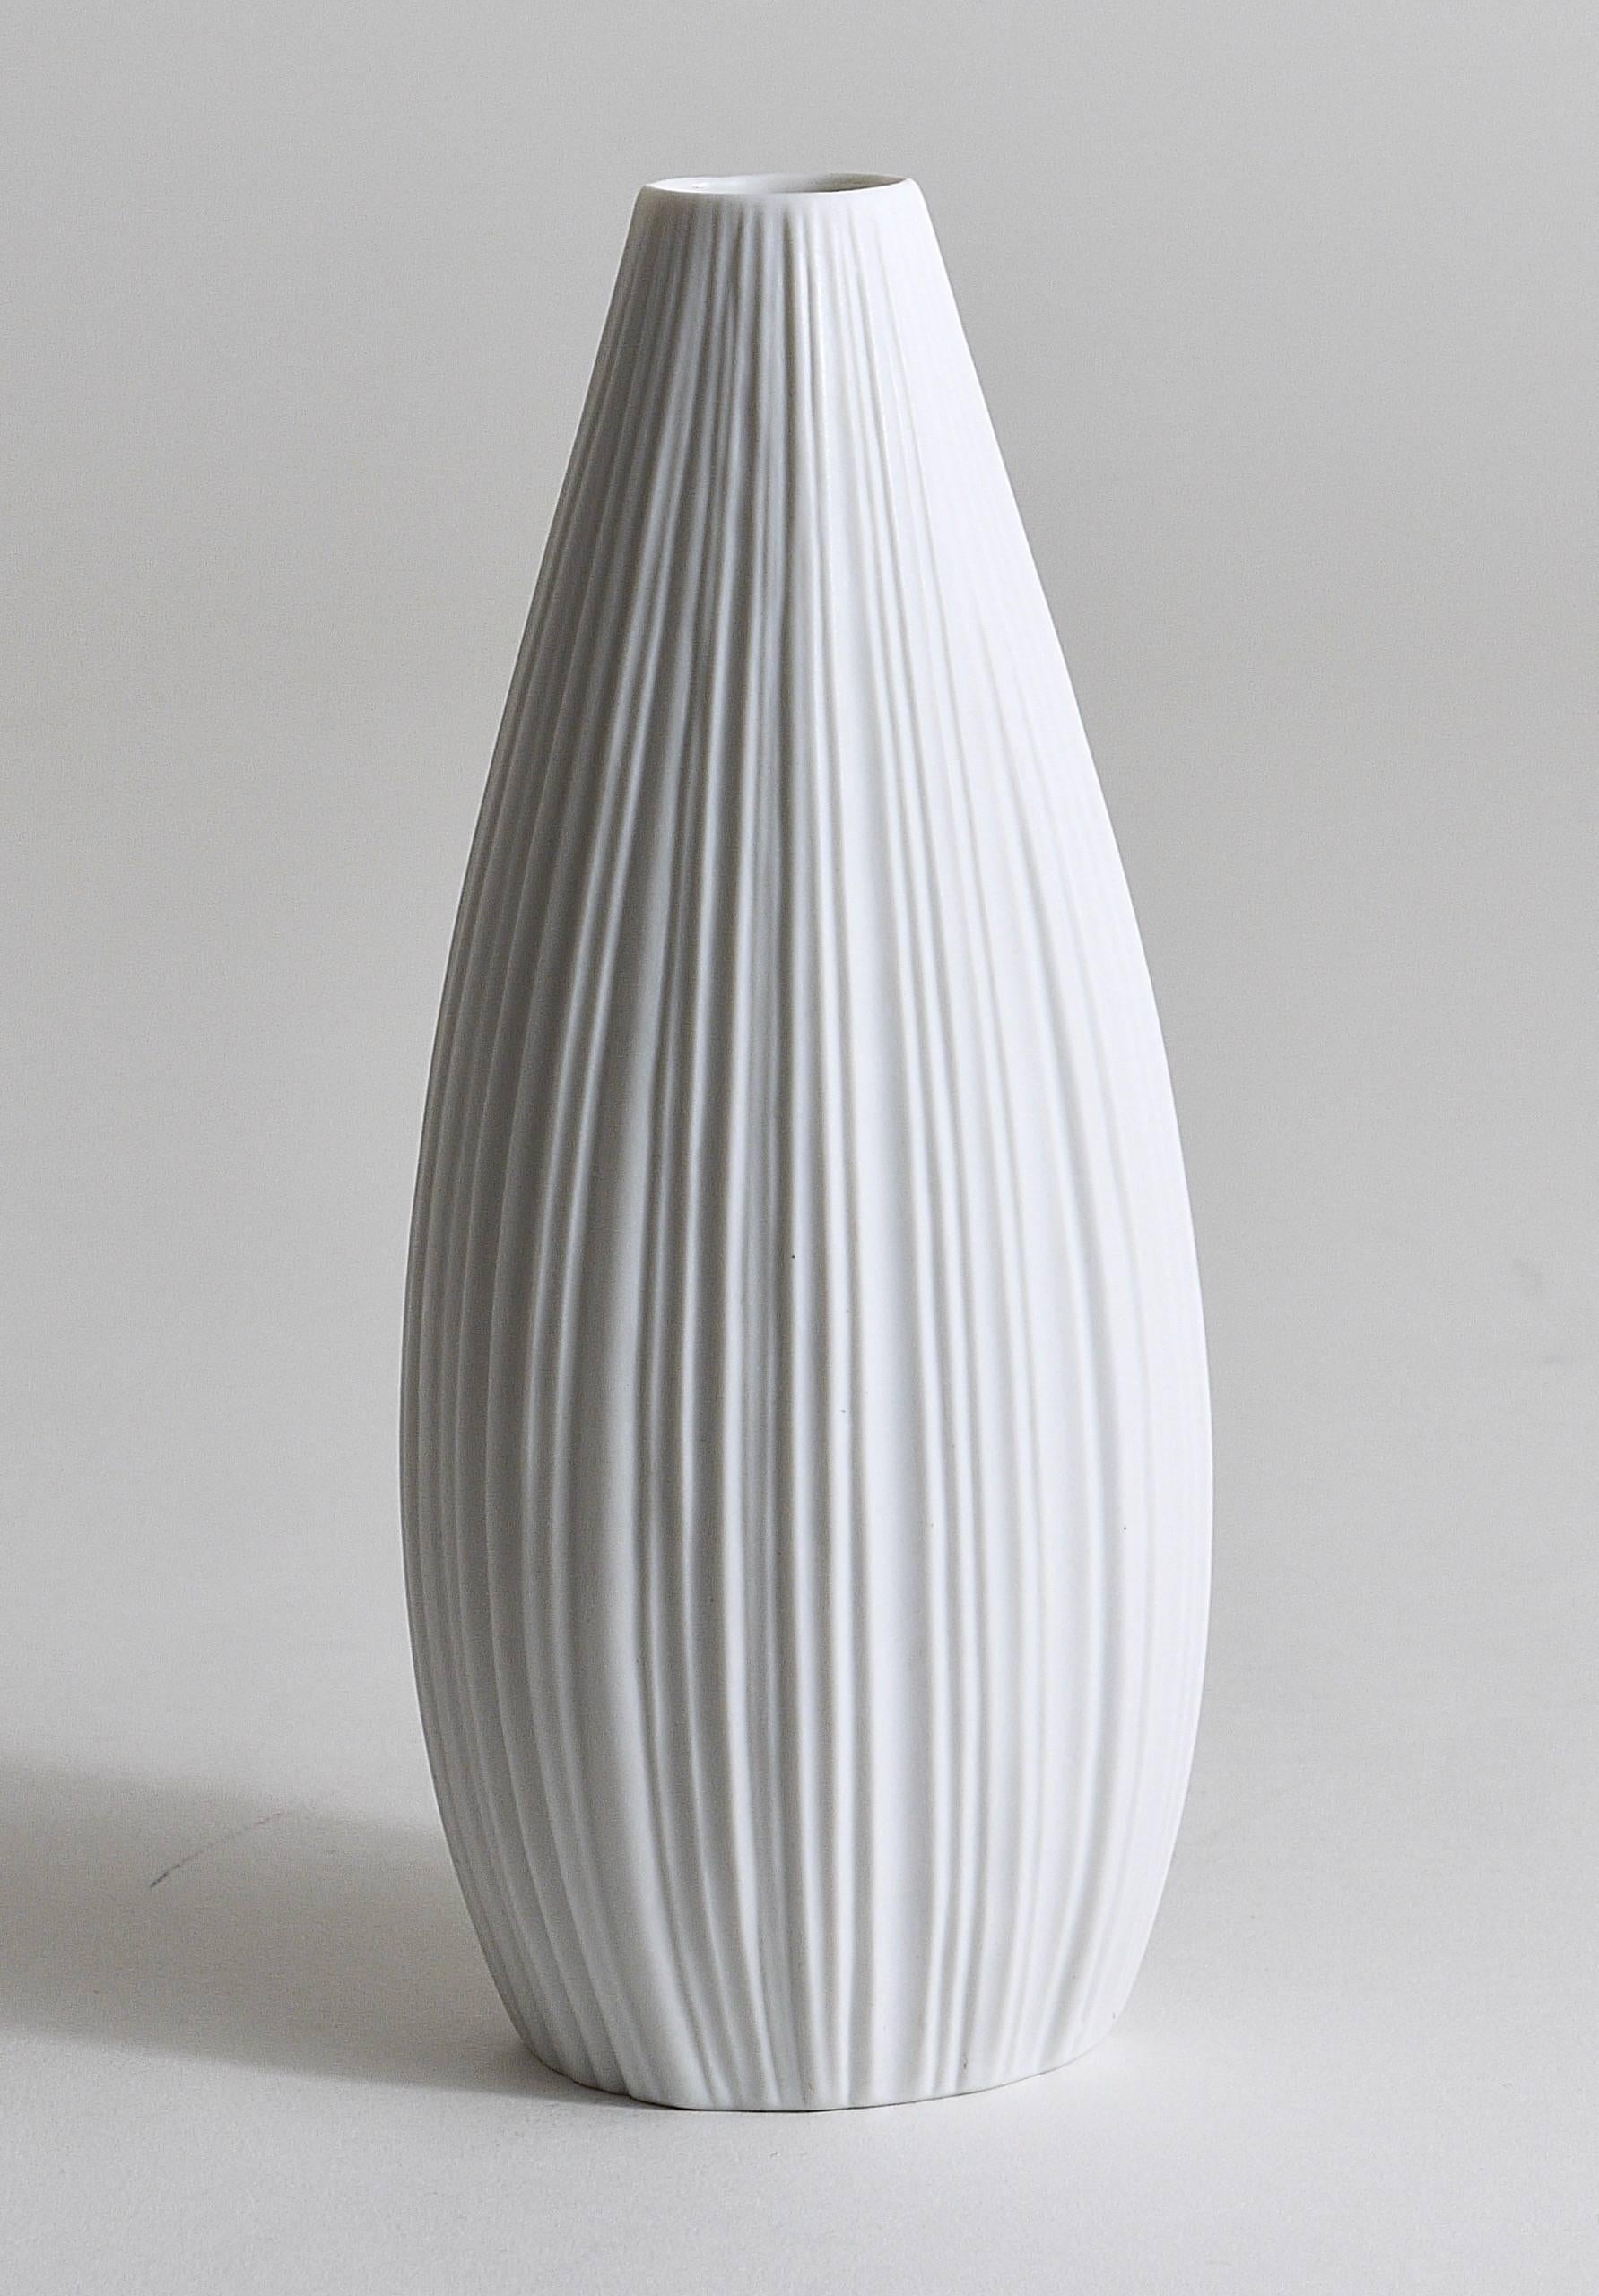 White Relief Striped Porcelain Vase, Martin Freyer, Rosenthal, Germany, 1960s For Sale 5